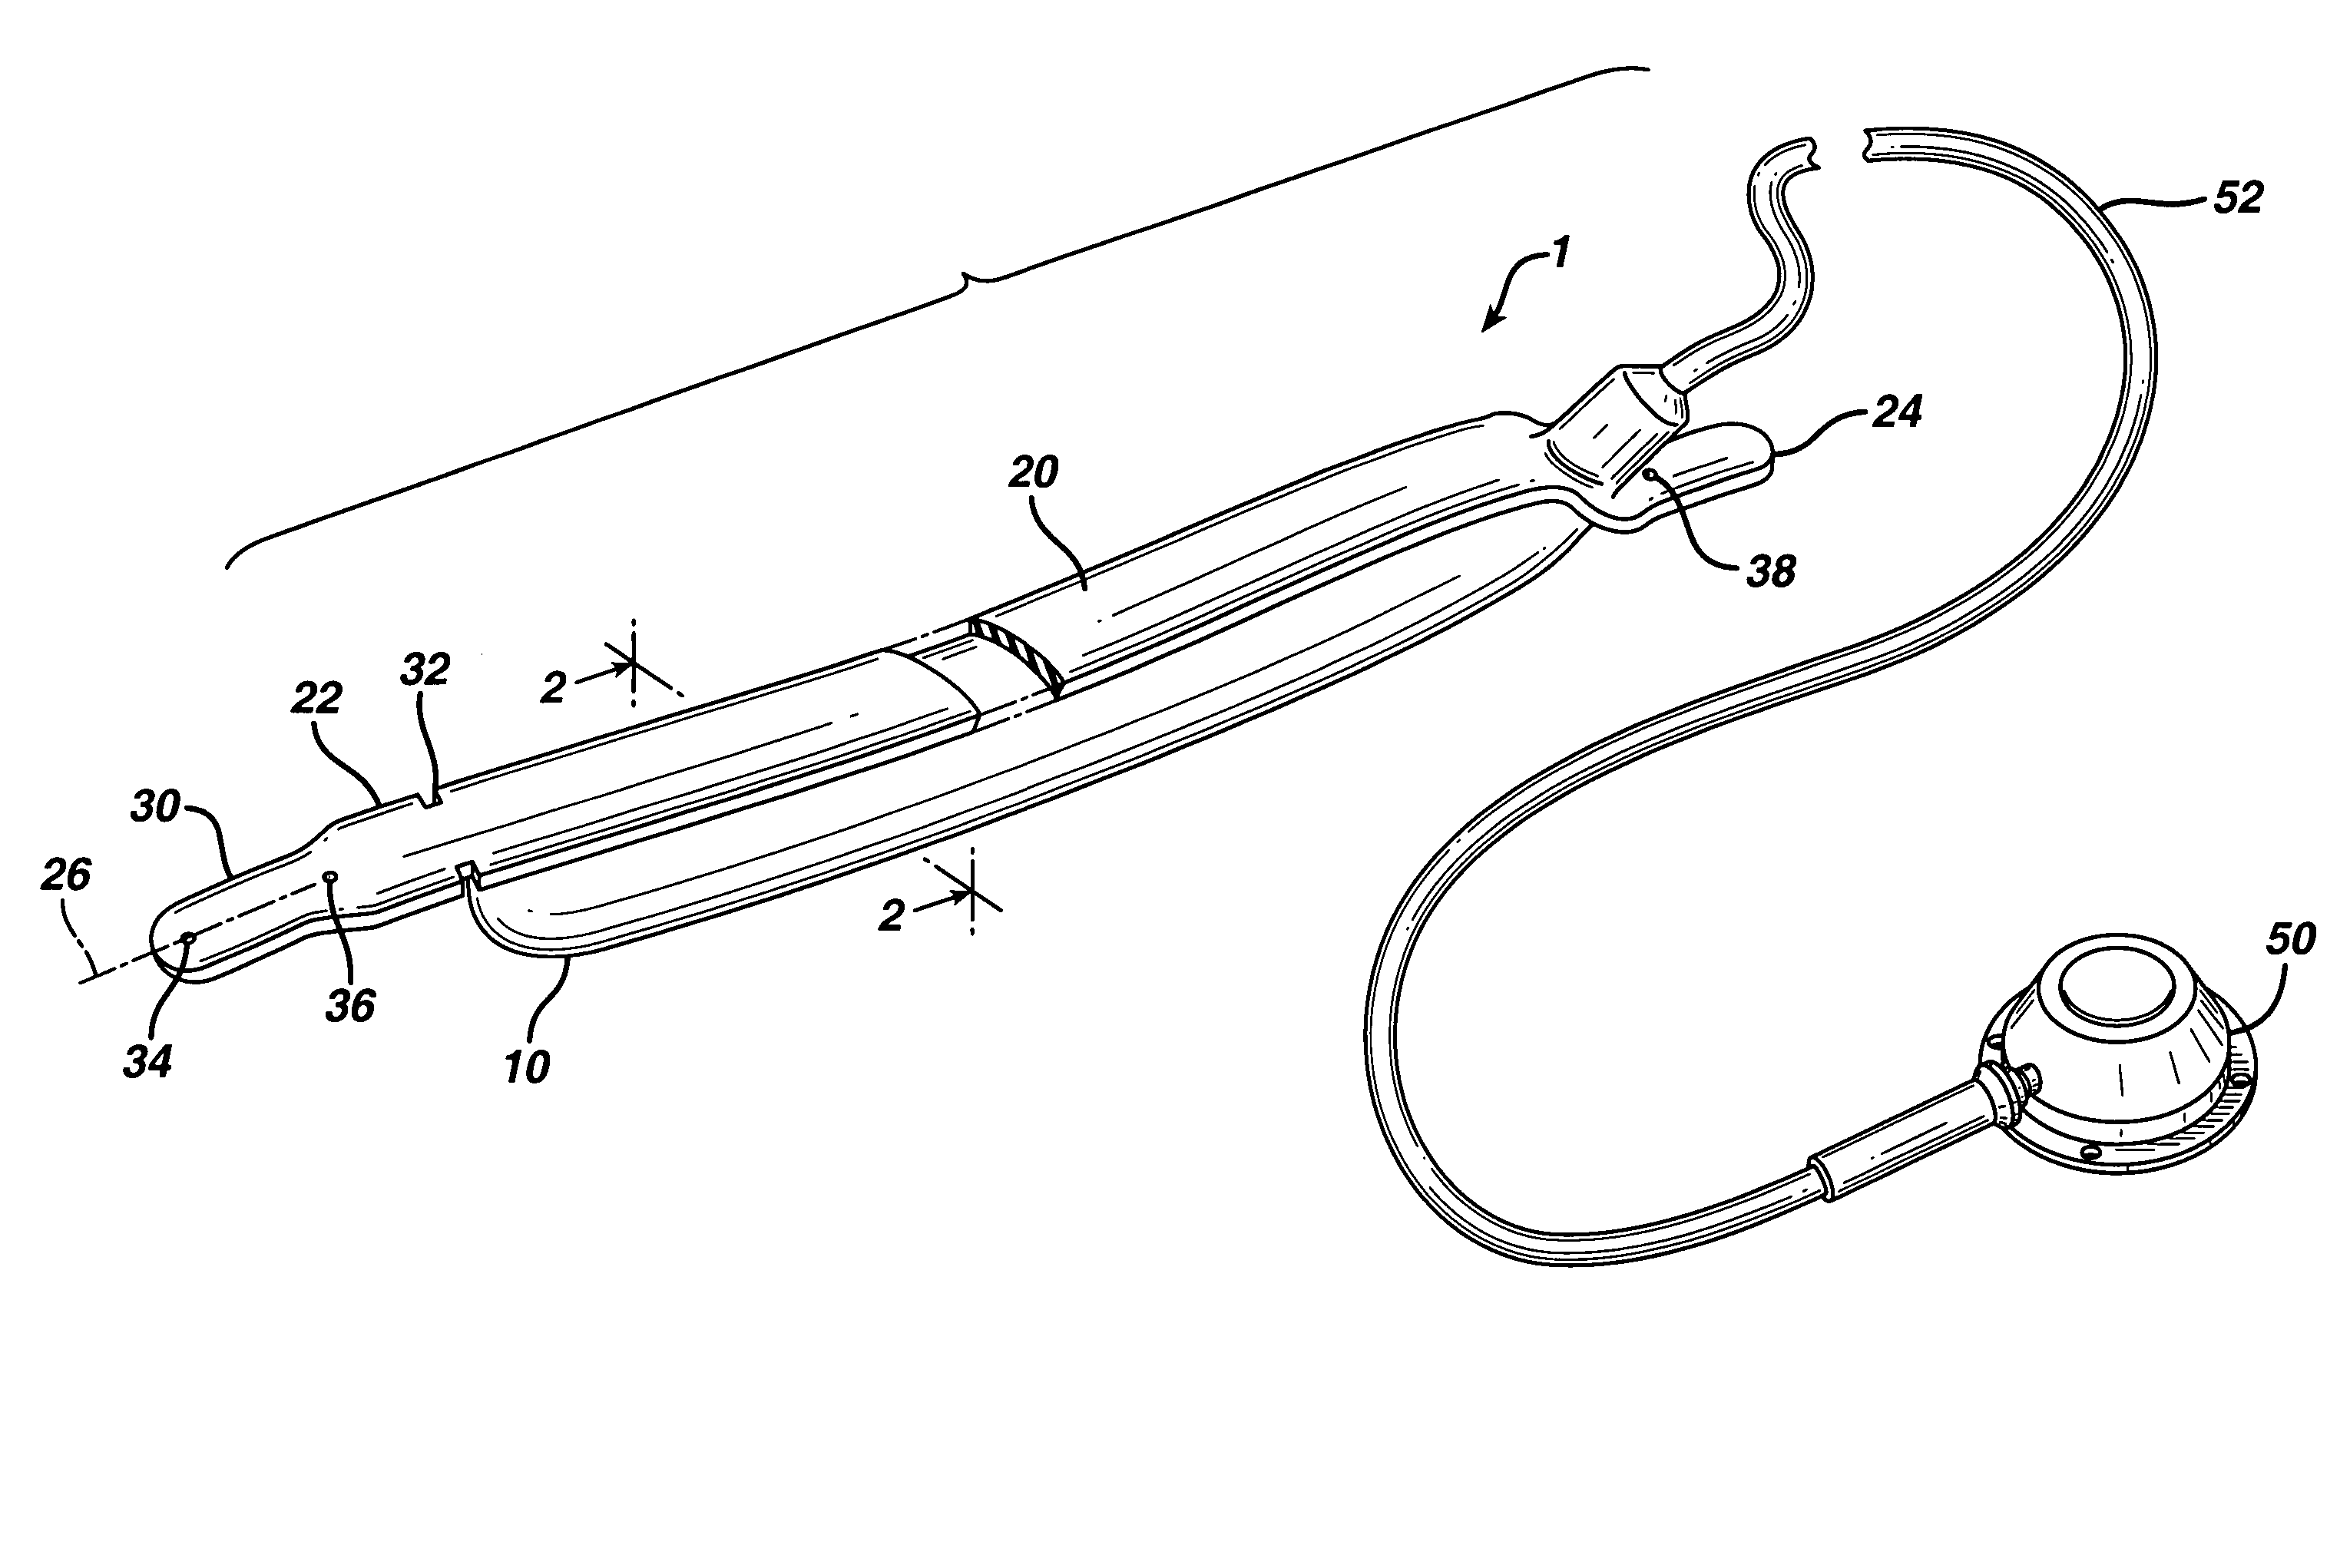 Method for implanting an adjustable band